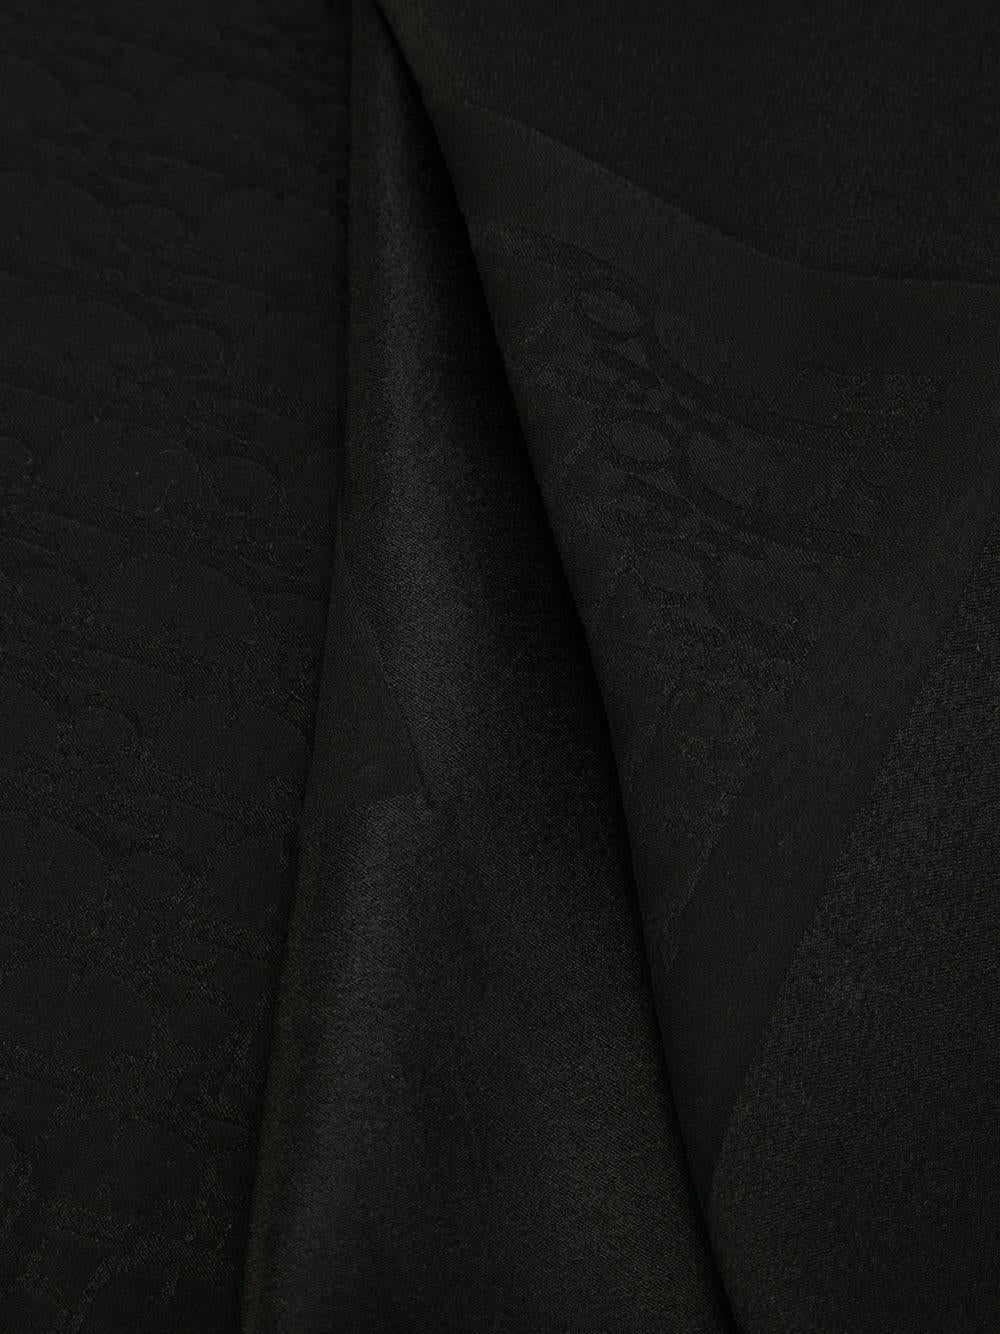 Black shell square scarf.

Colour: Black

Material: Shell 100%

Measurements: W: 90cm, L: 90cm

Condition: 10 out of 10
Excellent